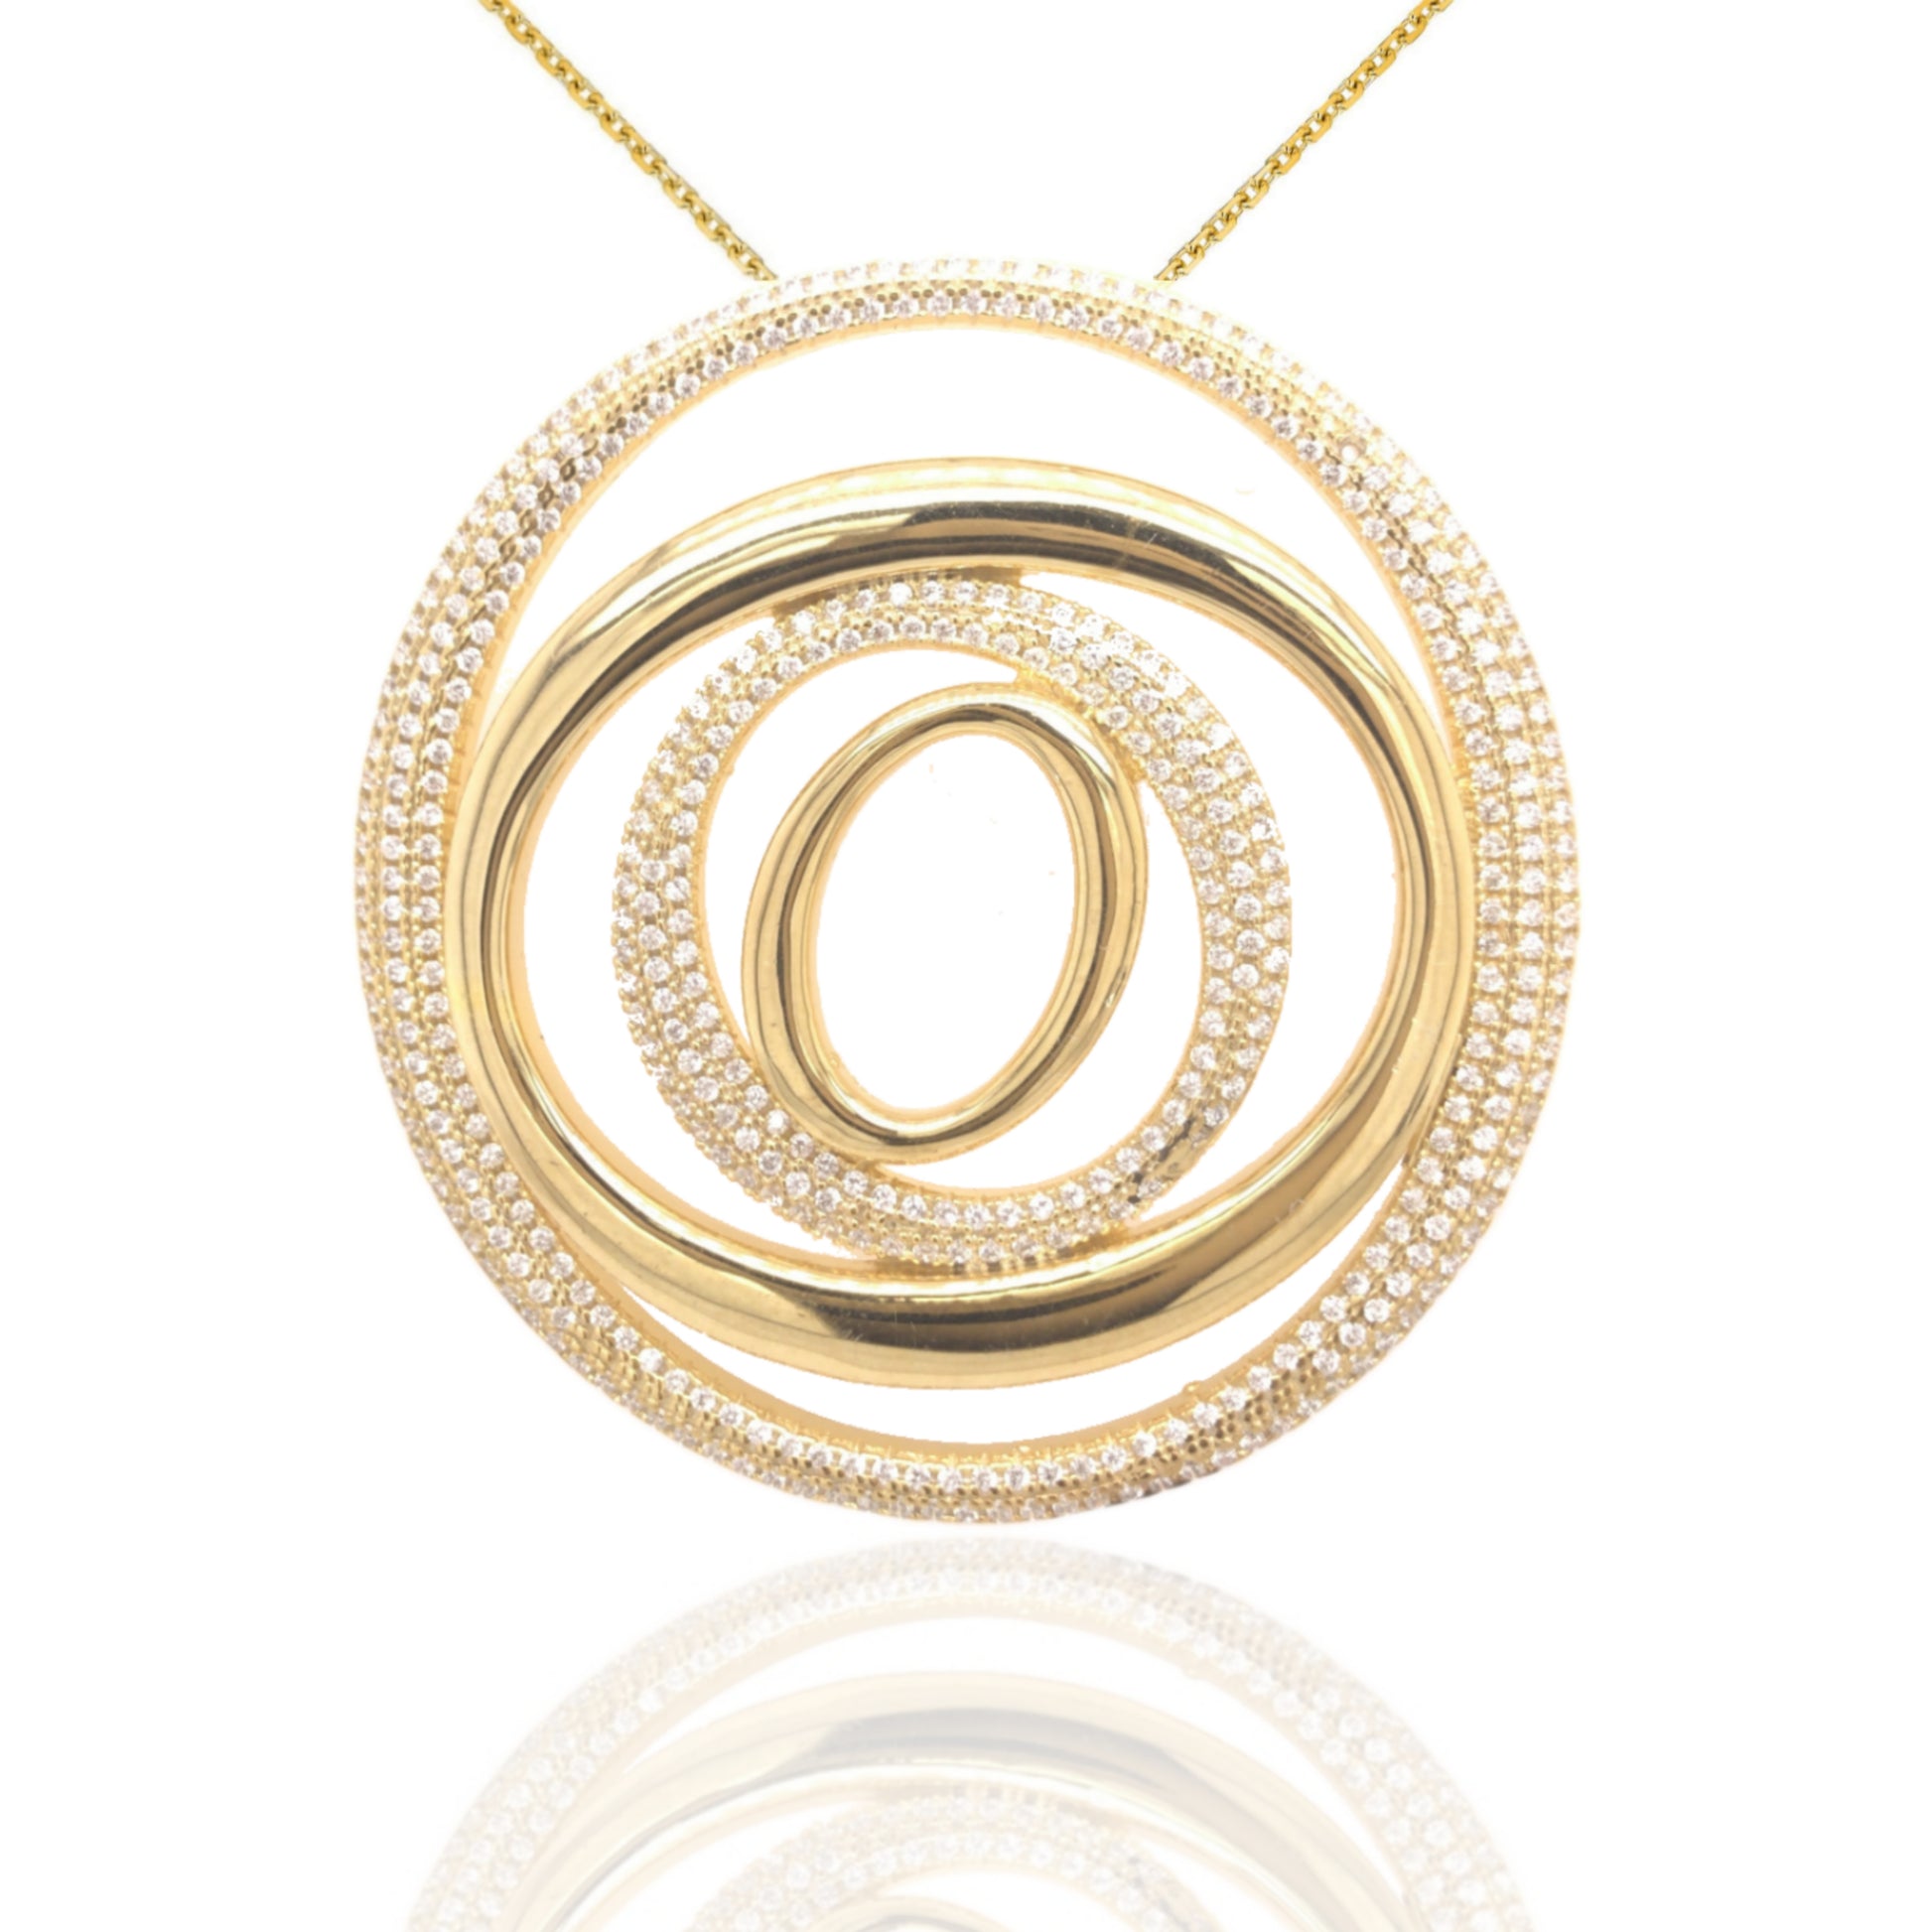 Sterling Silver Large Circles Pendant - HK Jewels